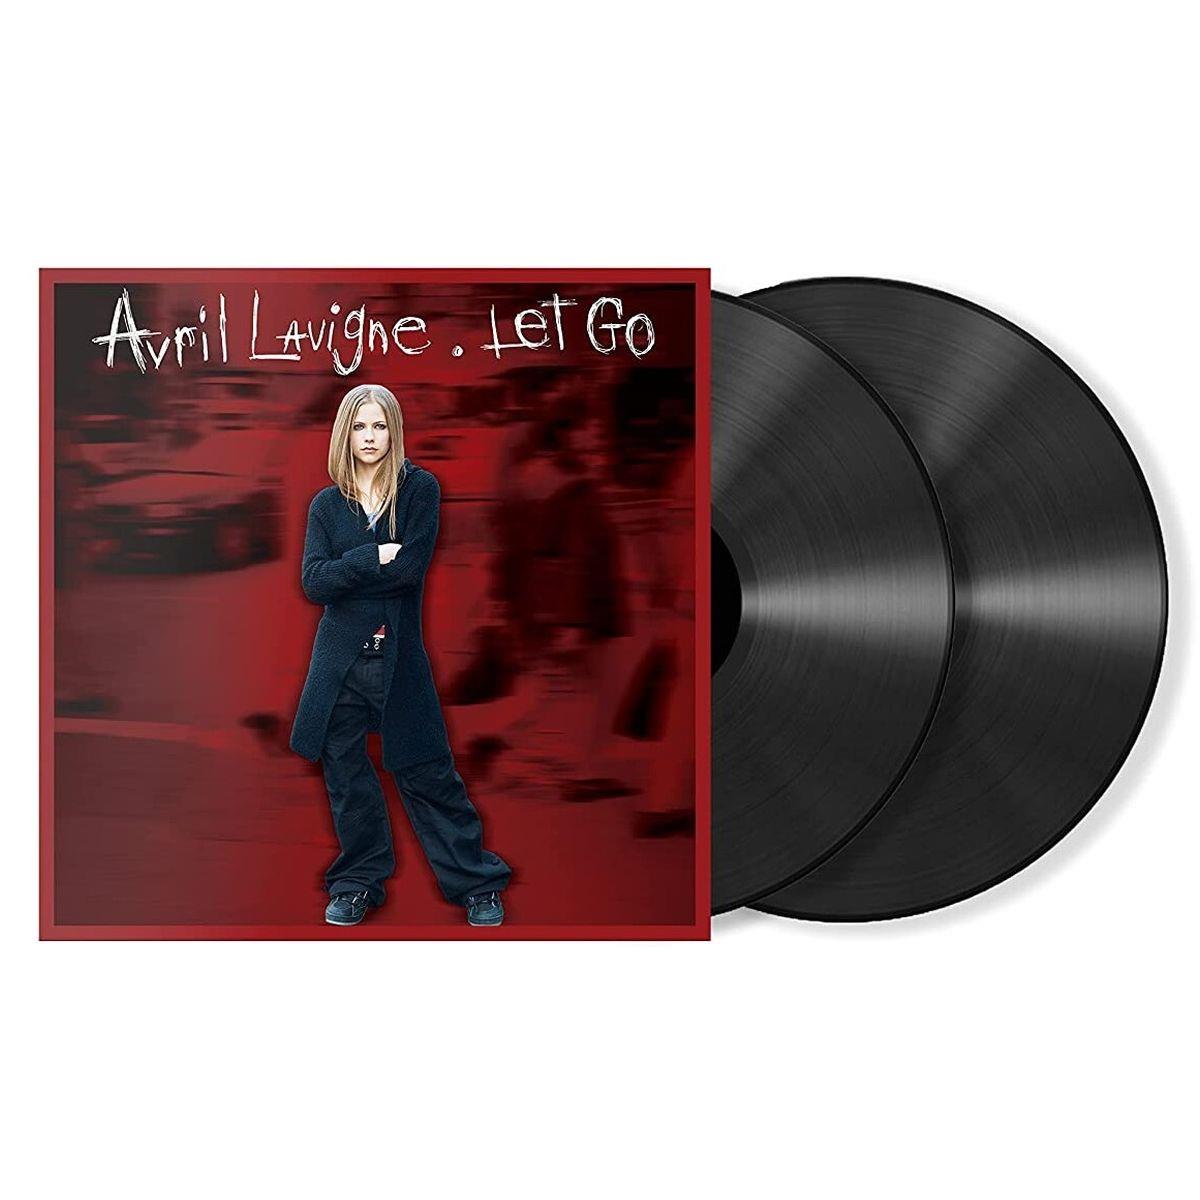 let go (20th anniversary vinyl edition)